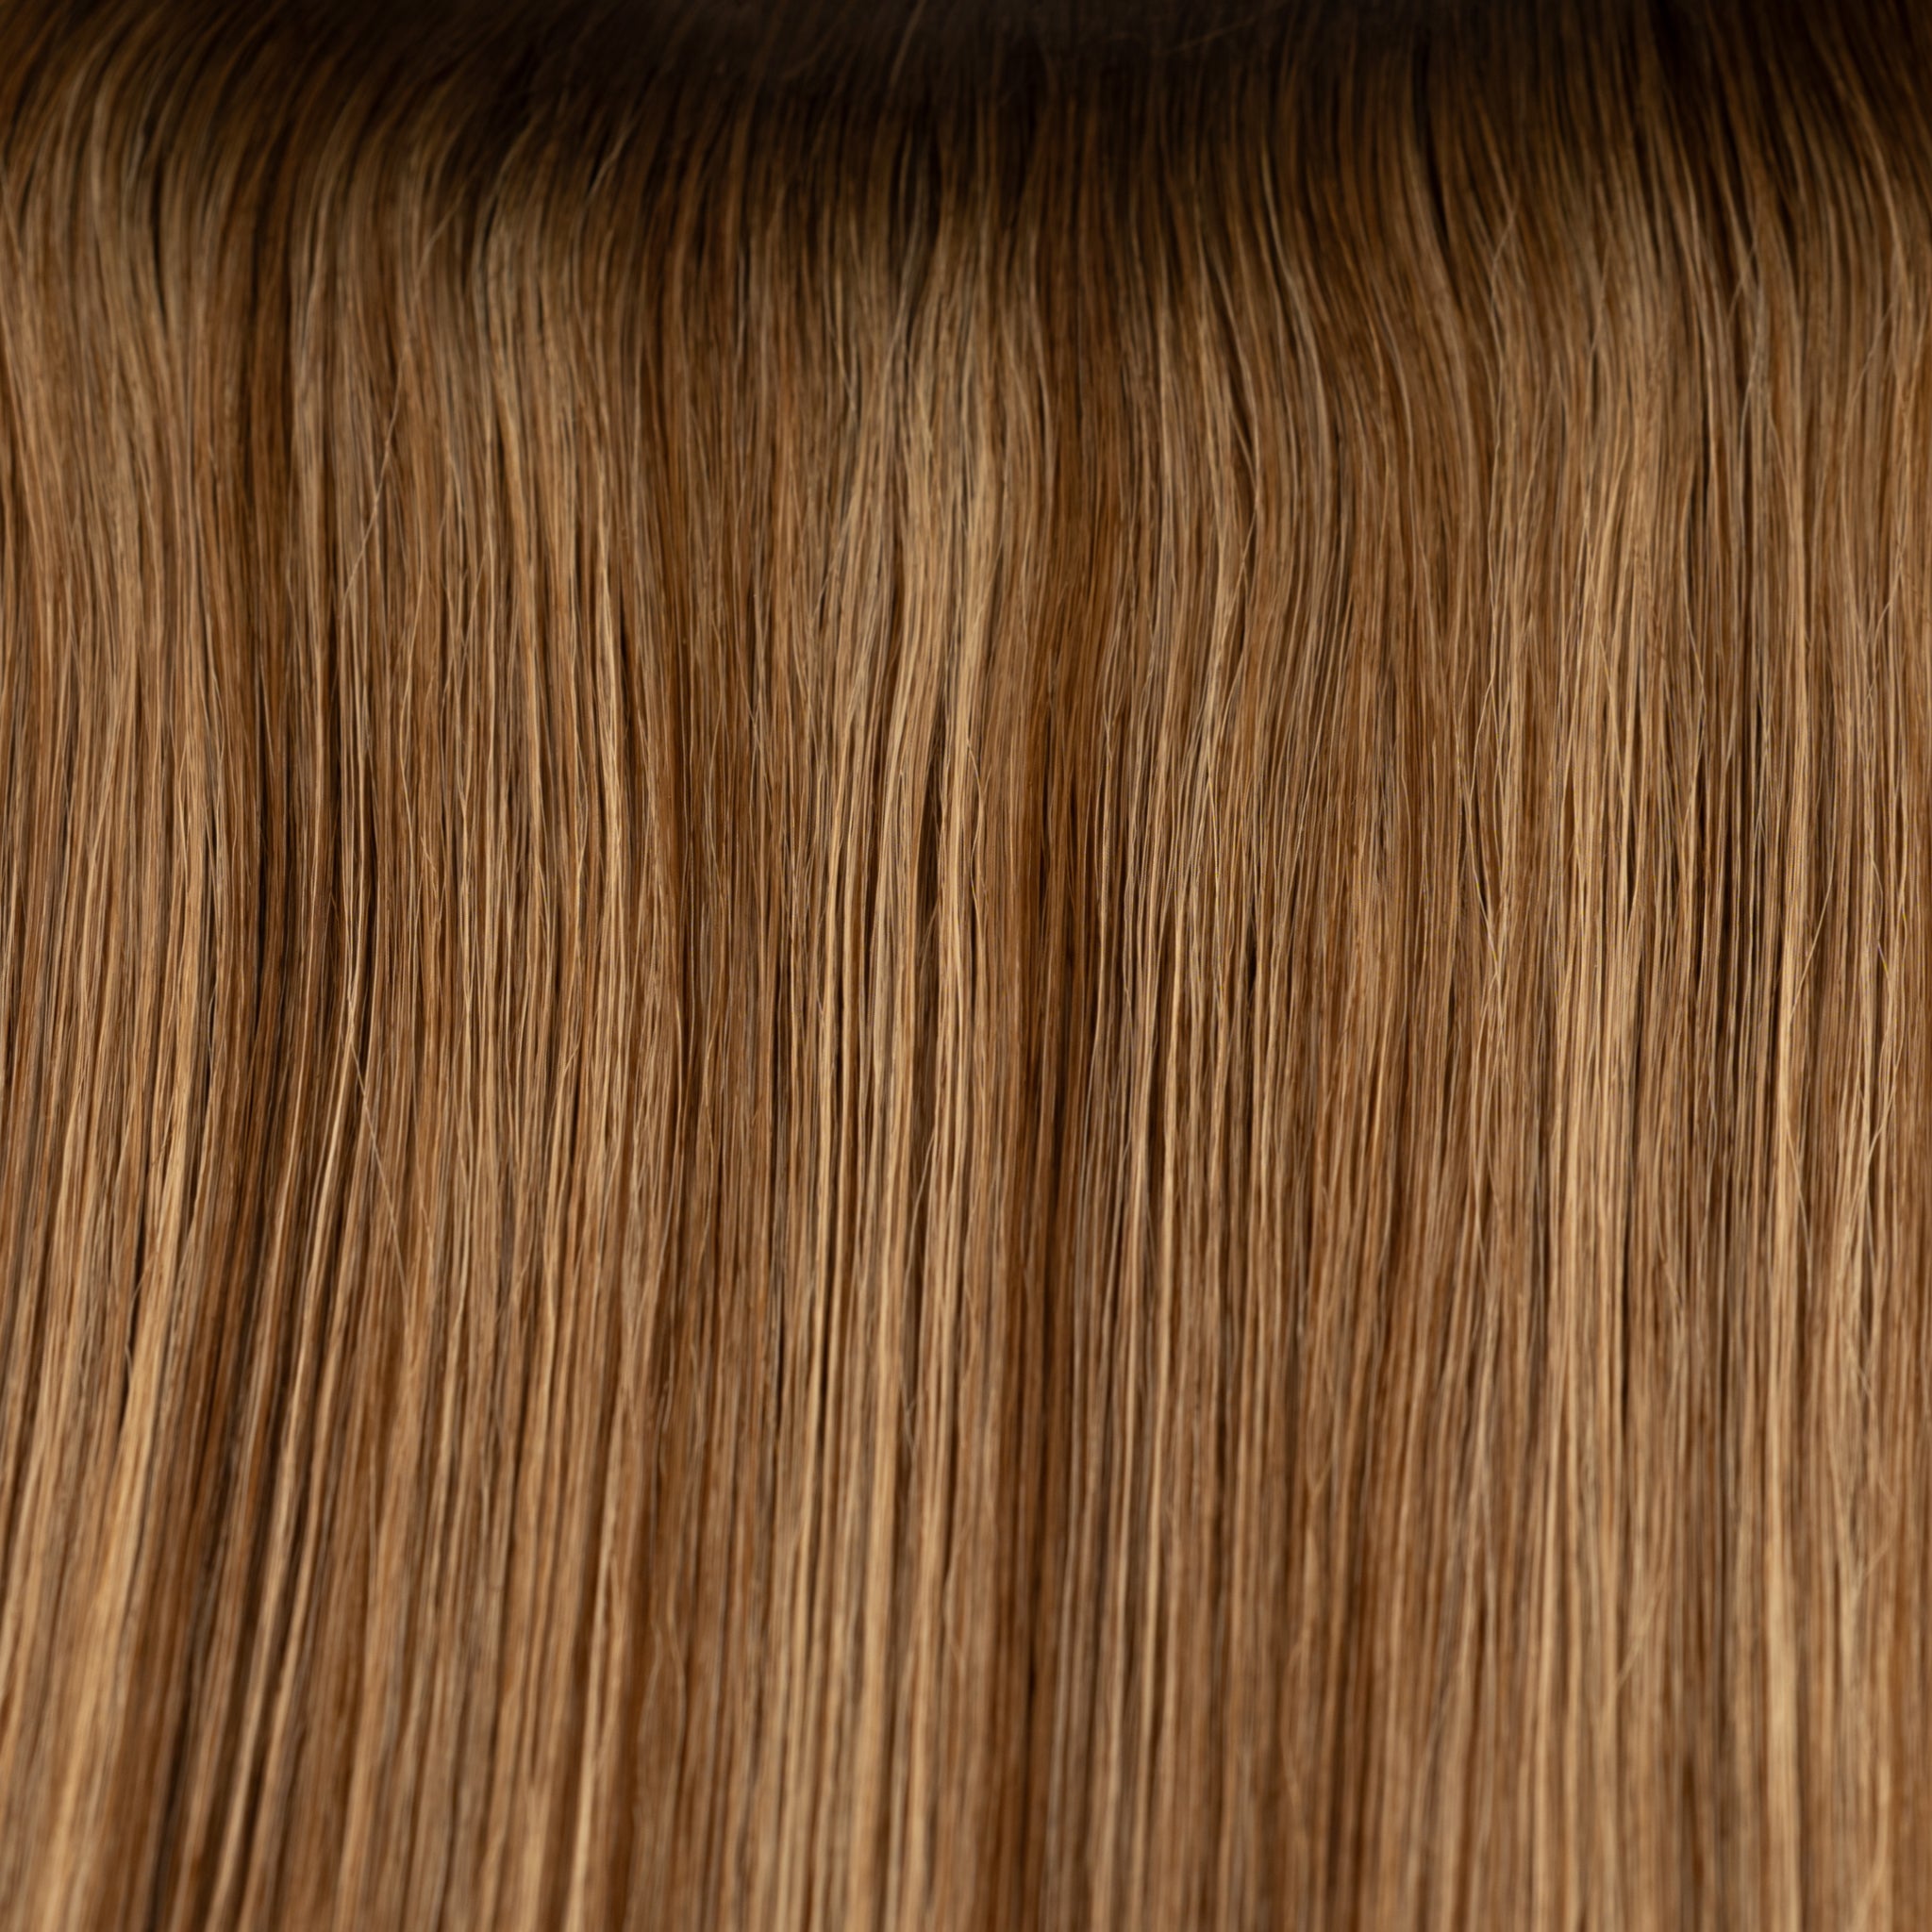 Dark Brown Beige Blonde 'Como' Root Tap Blend Ultra Narrow Clip In Hair Extensions